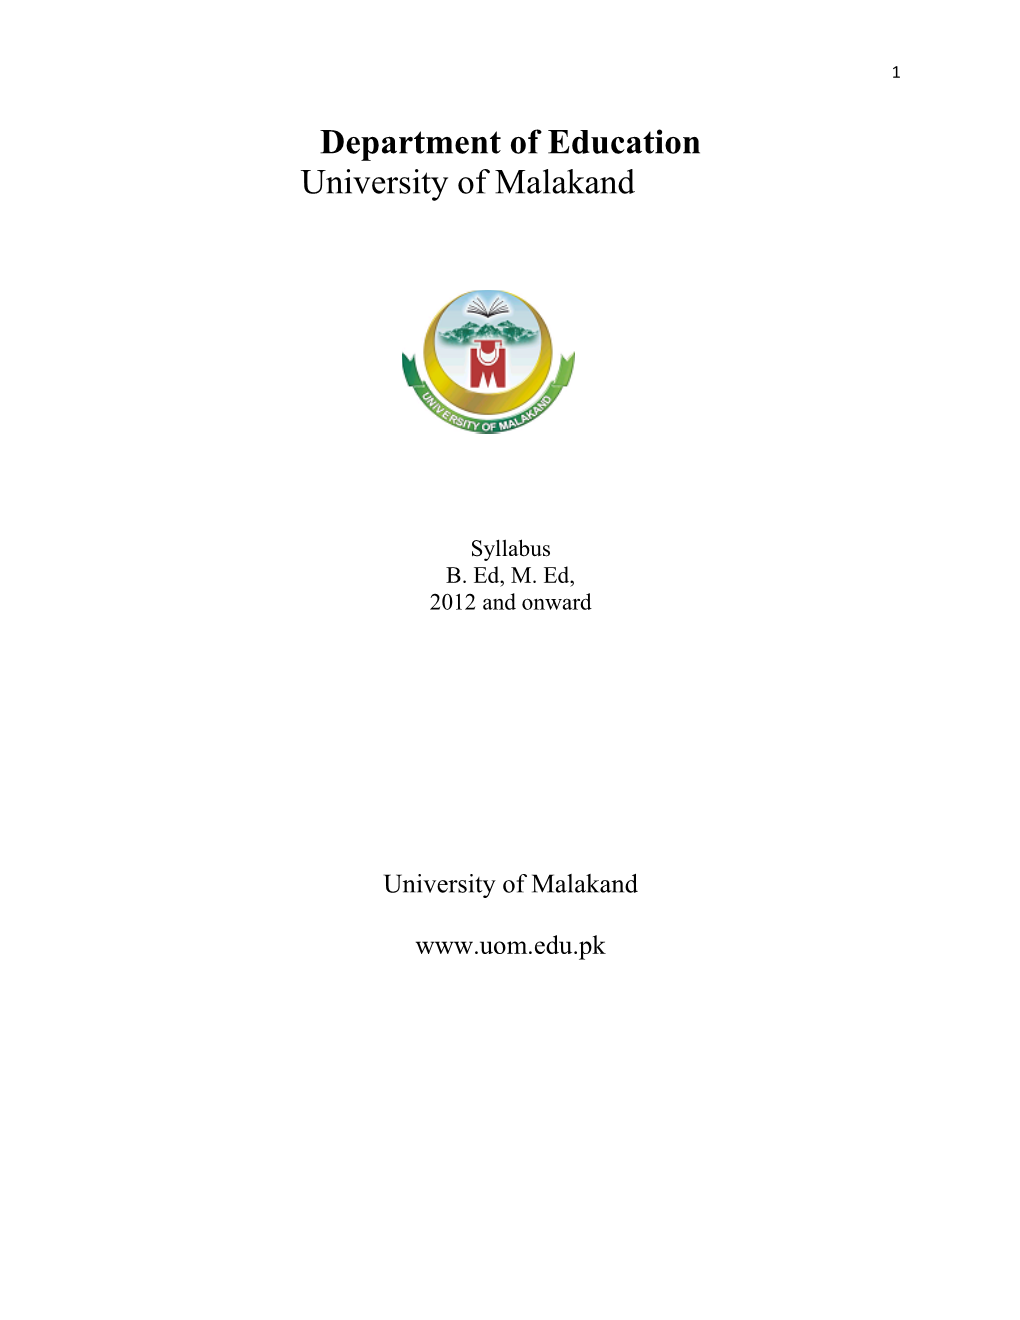 Department of Education University of Malakand